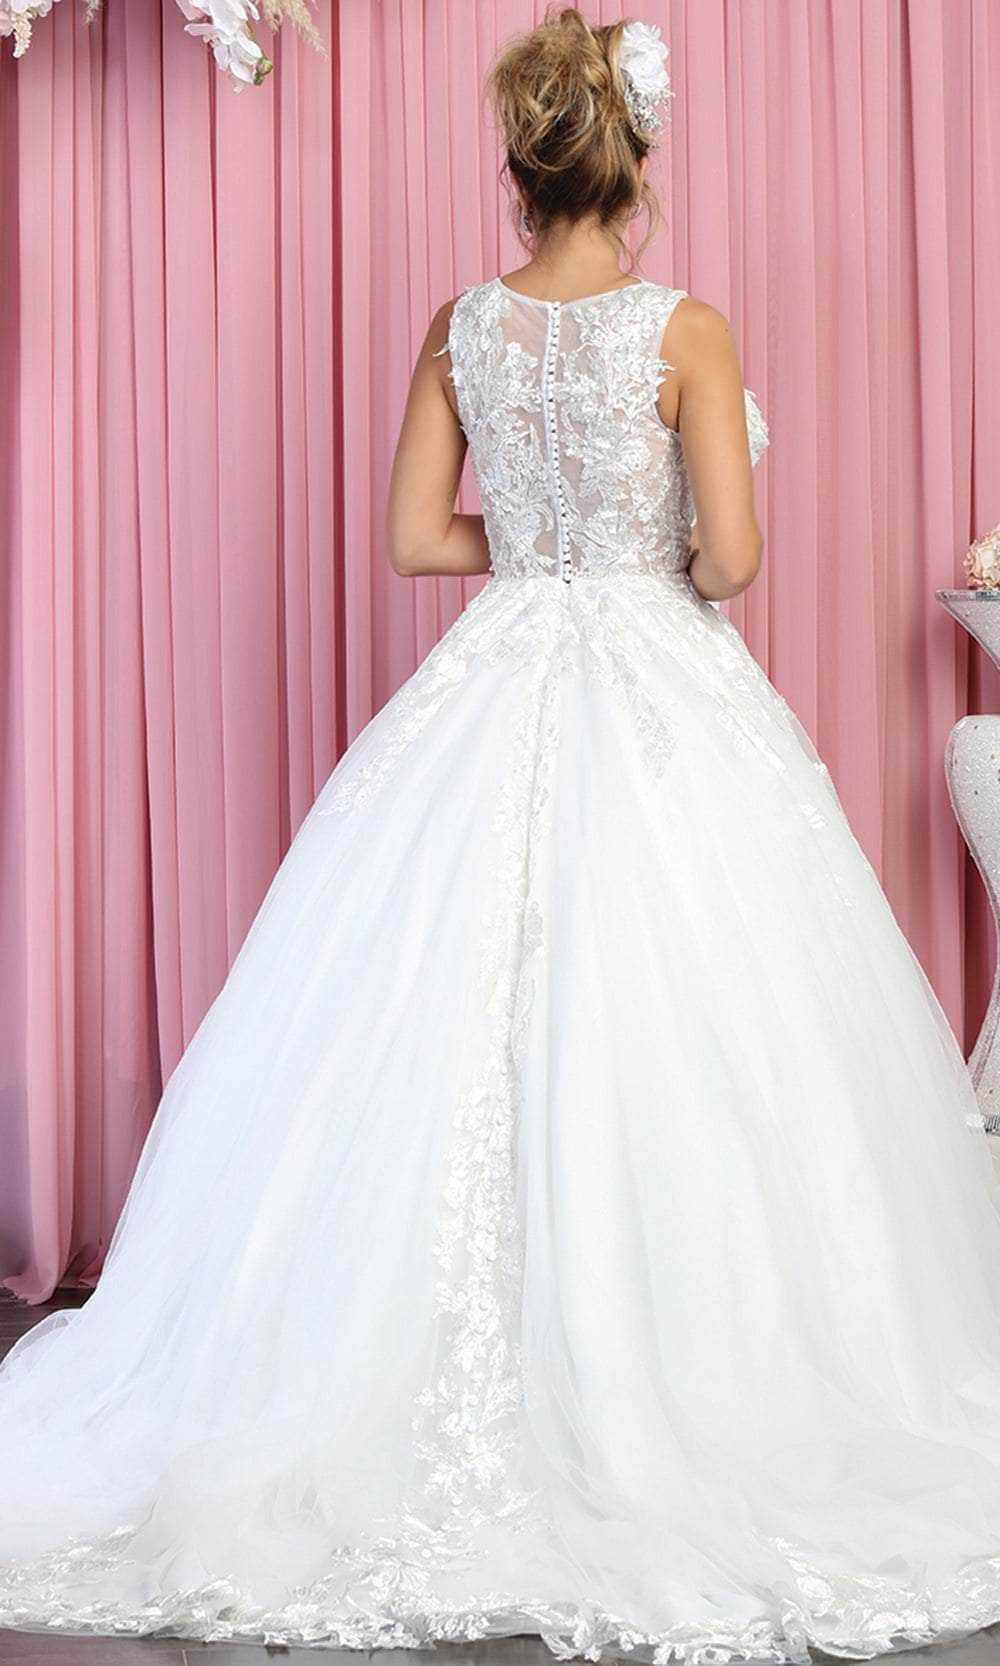 May Queen, May Queen RQ7900 - Sleeveless Illusion Jewel Neckline Wedding Dress